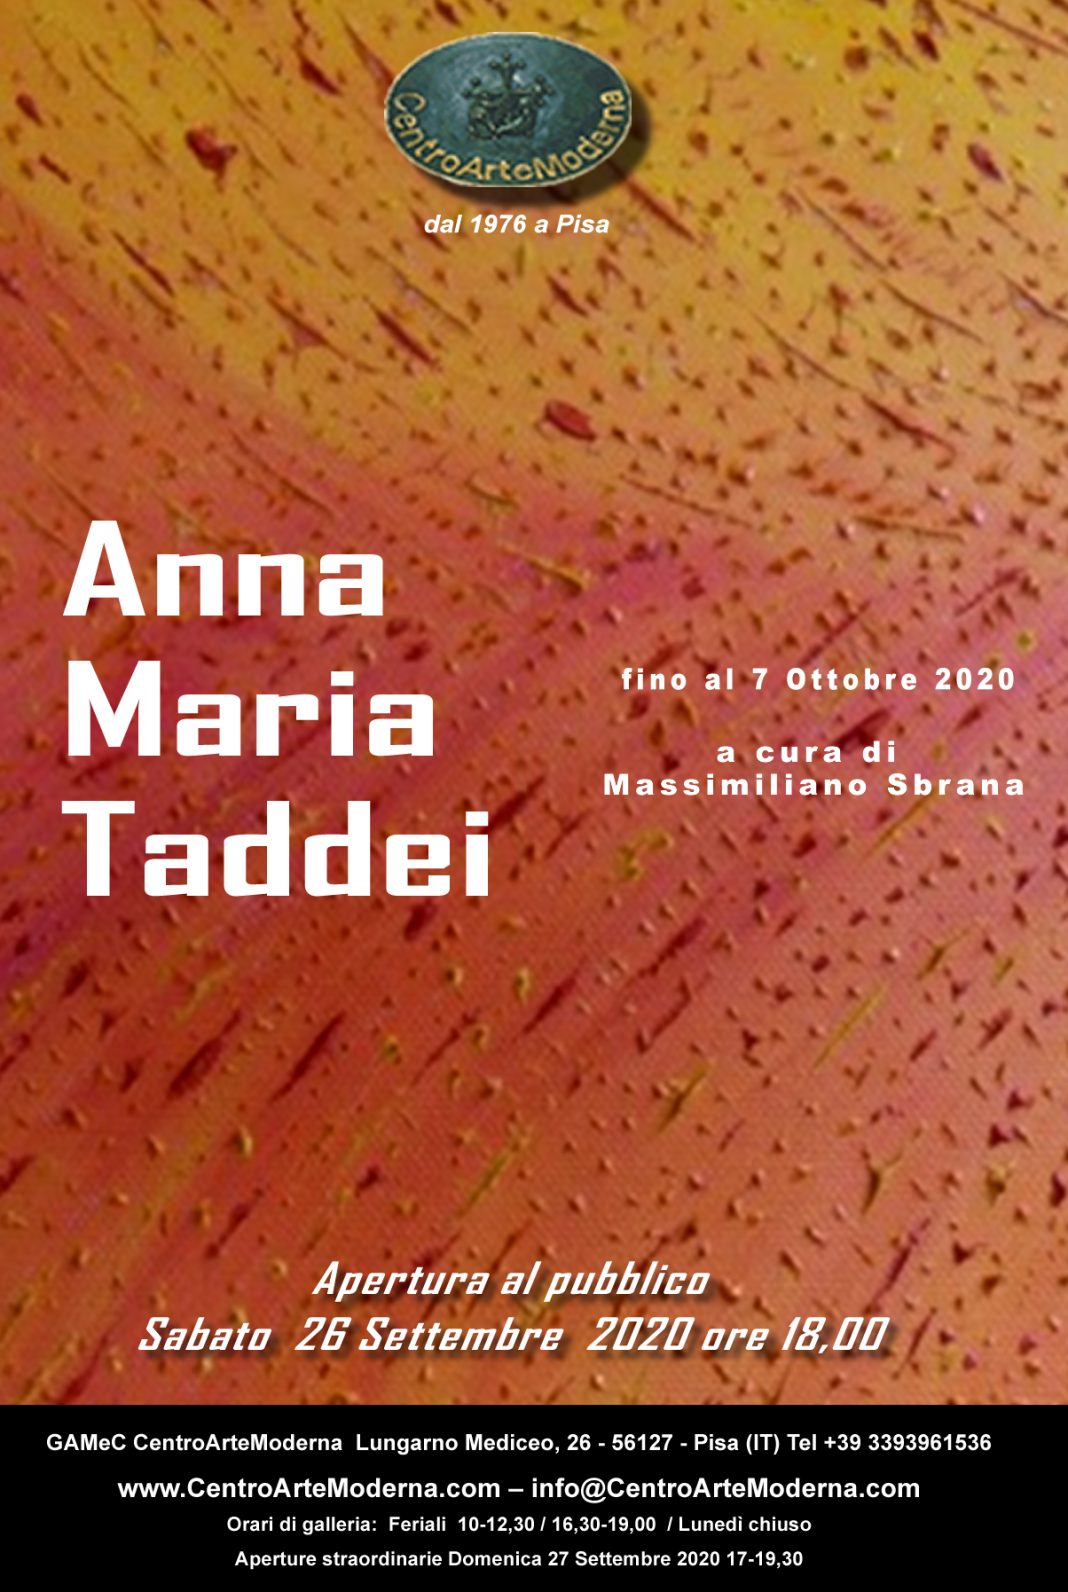 Anna Maria Taddeihttps://www.exibart.com/repository/media/formidable/11/invito-Anna-Maria-Taddei-2020-1068x1592.jpg